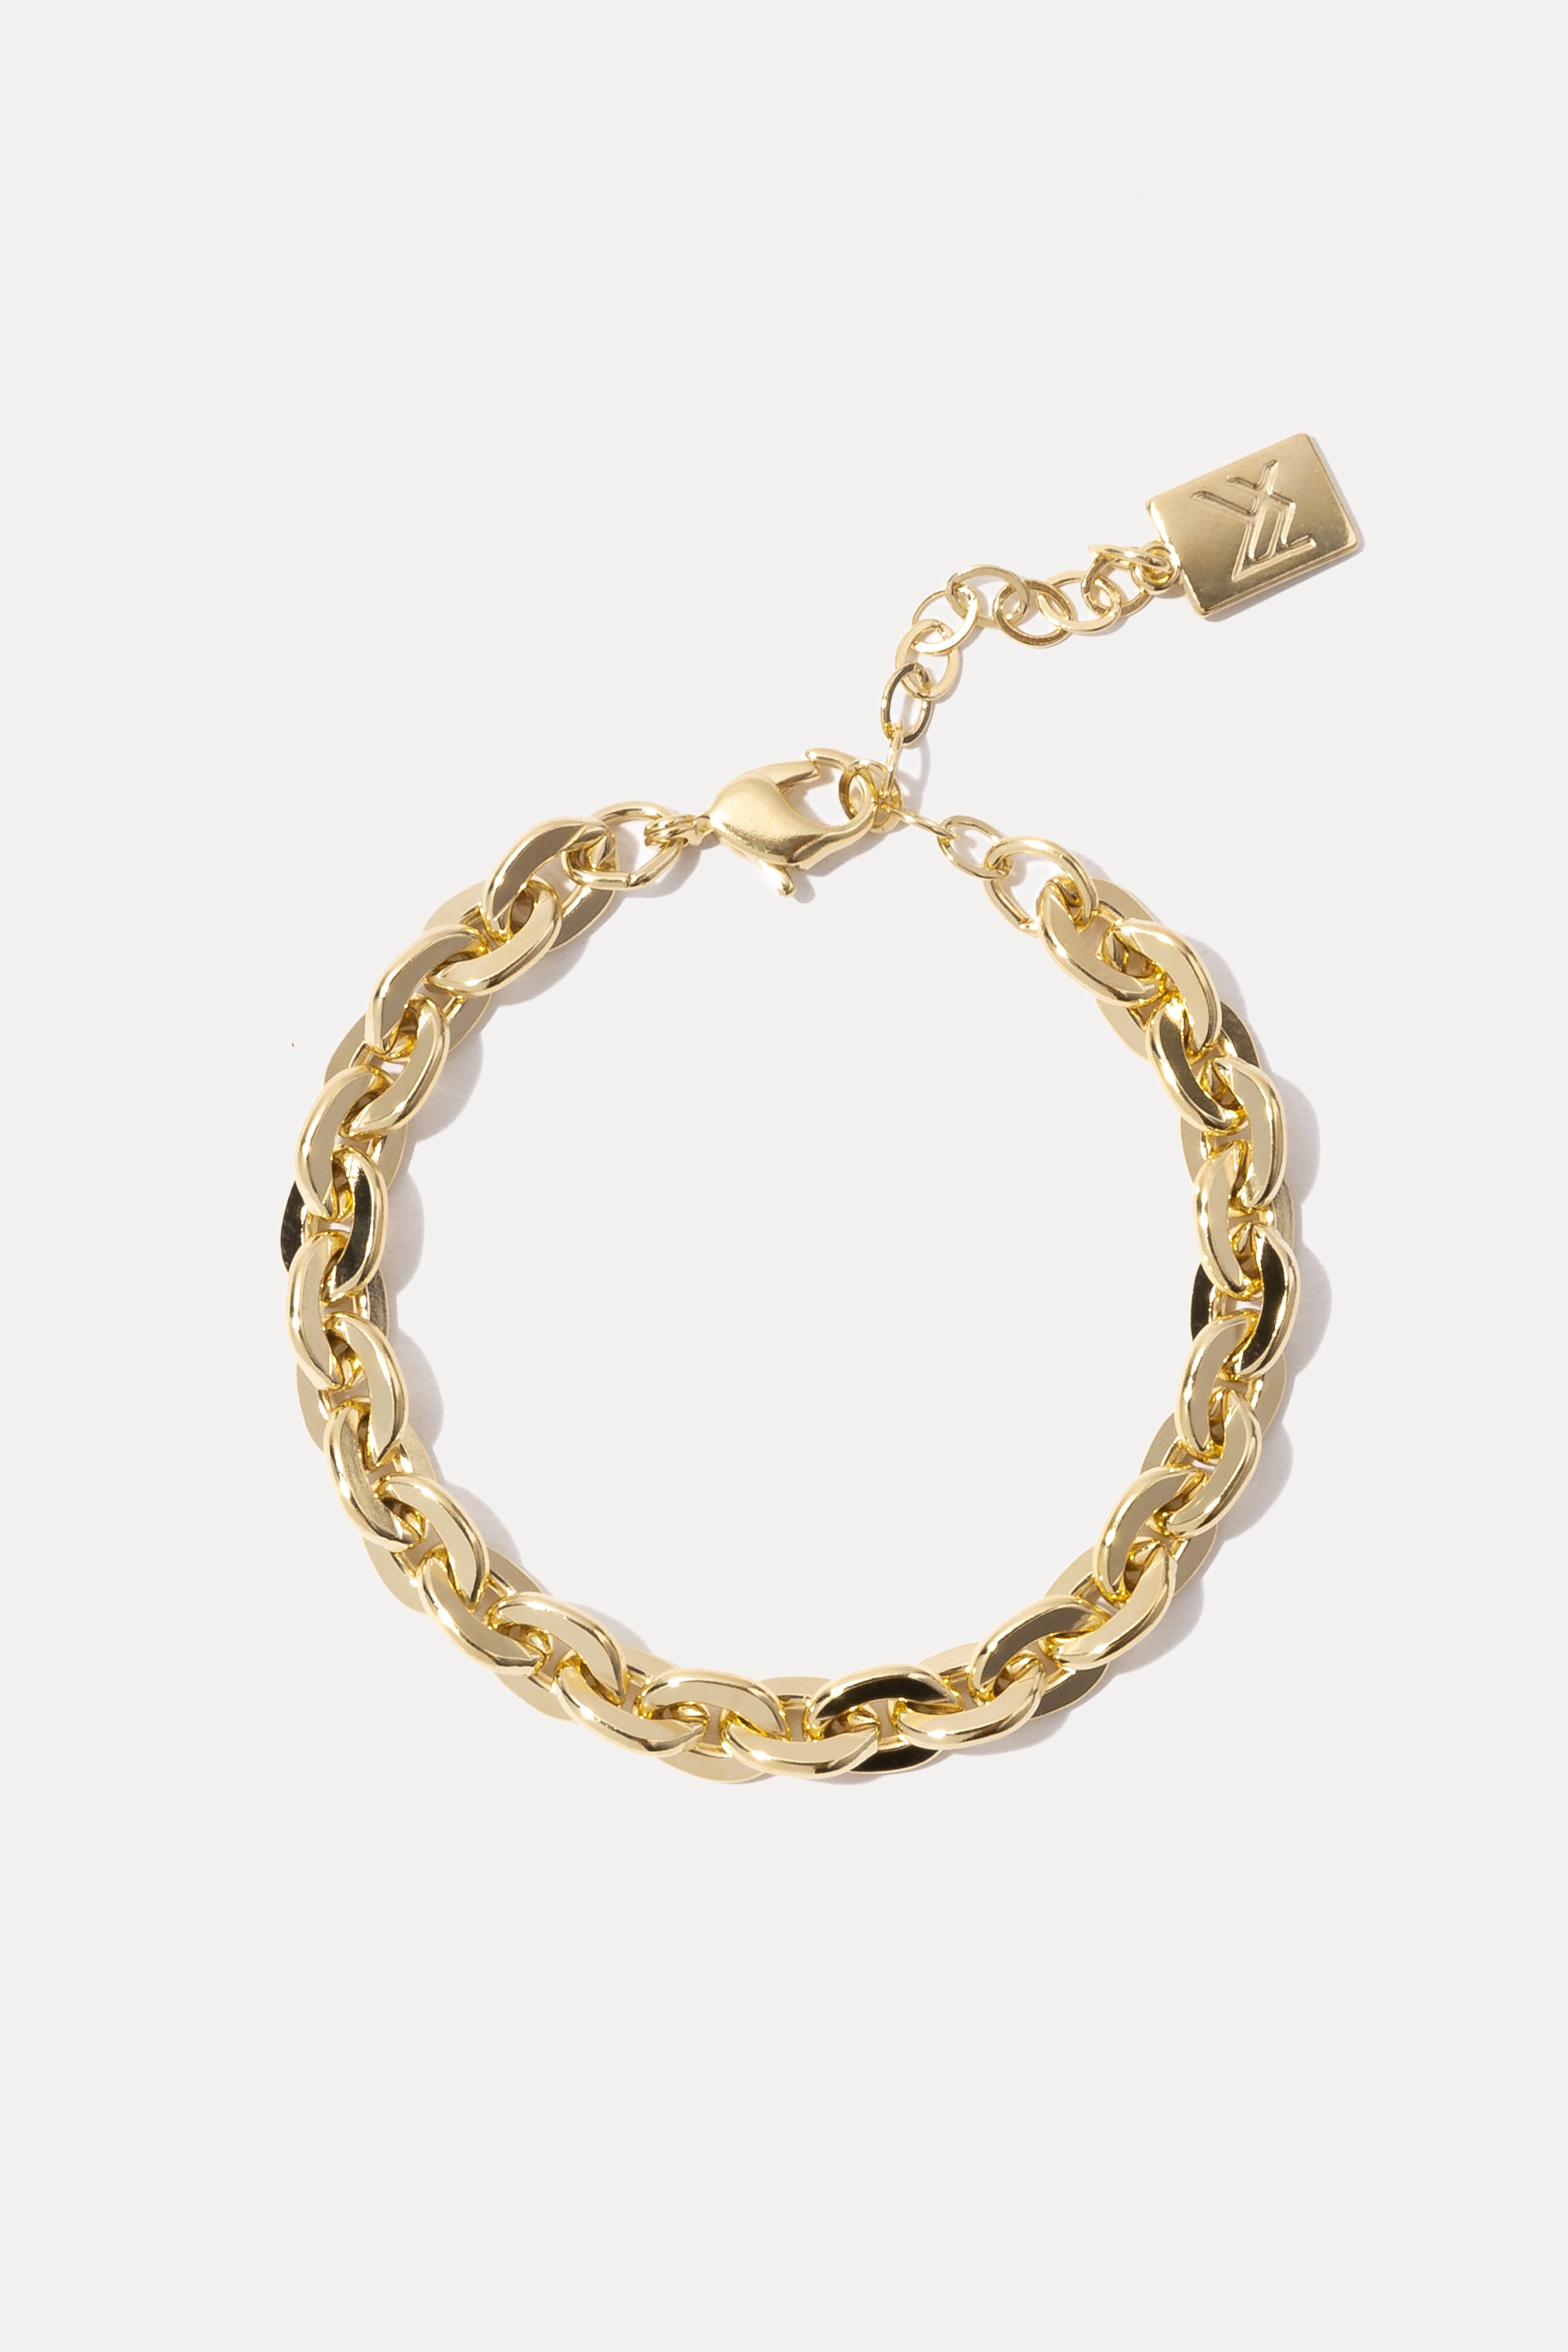 Vintage Louis Vuitton Chunky Heavy Link Bracelet Set in 18K Yellow Gold